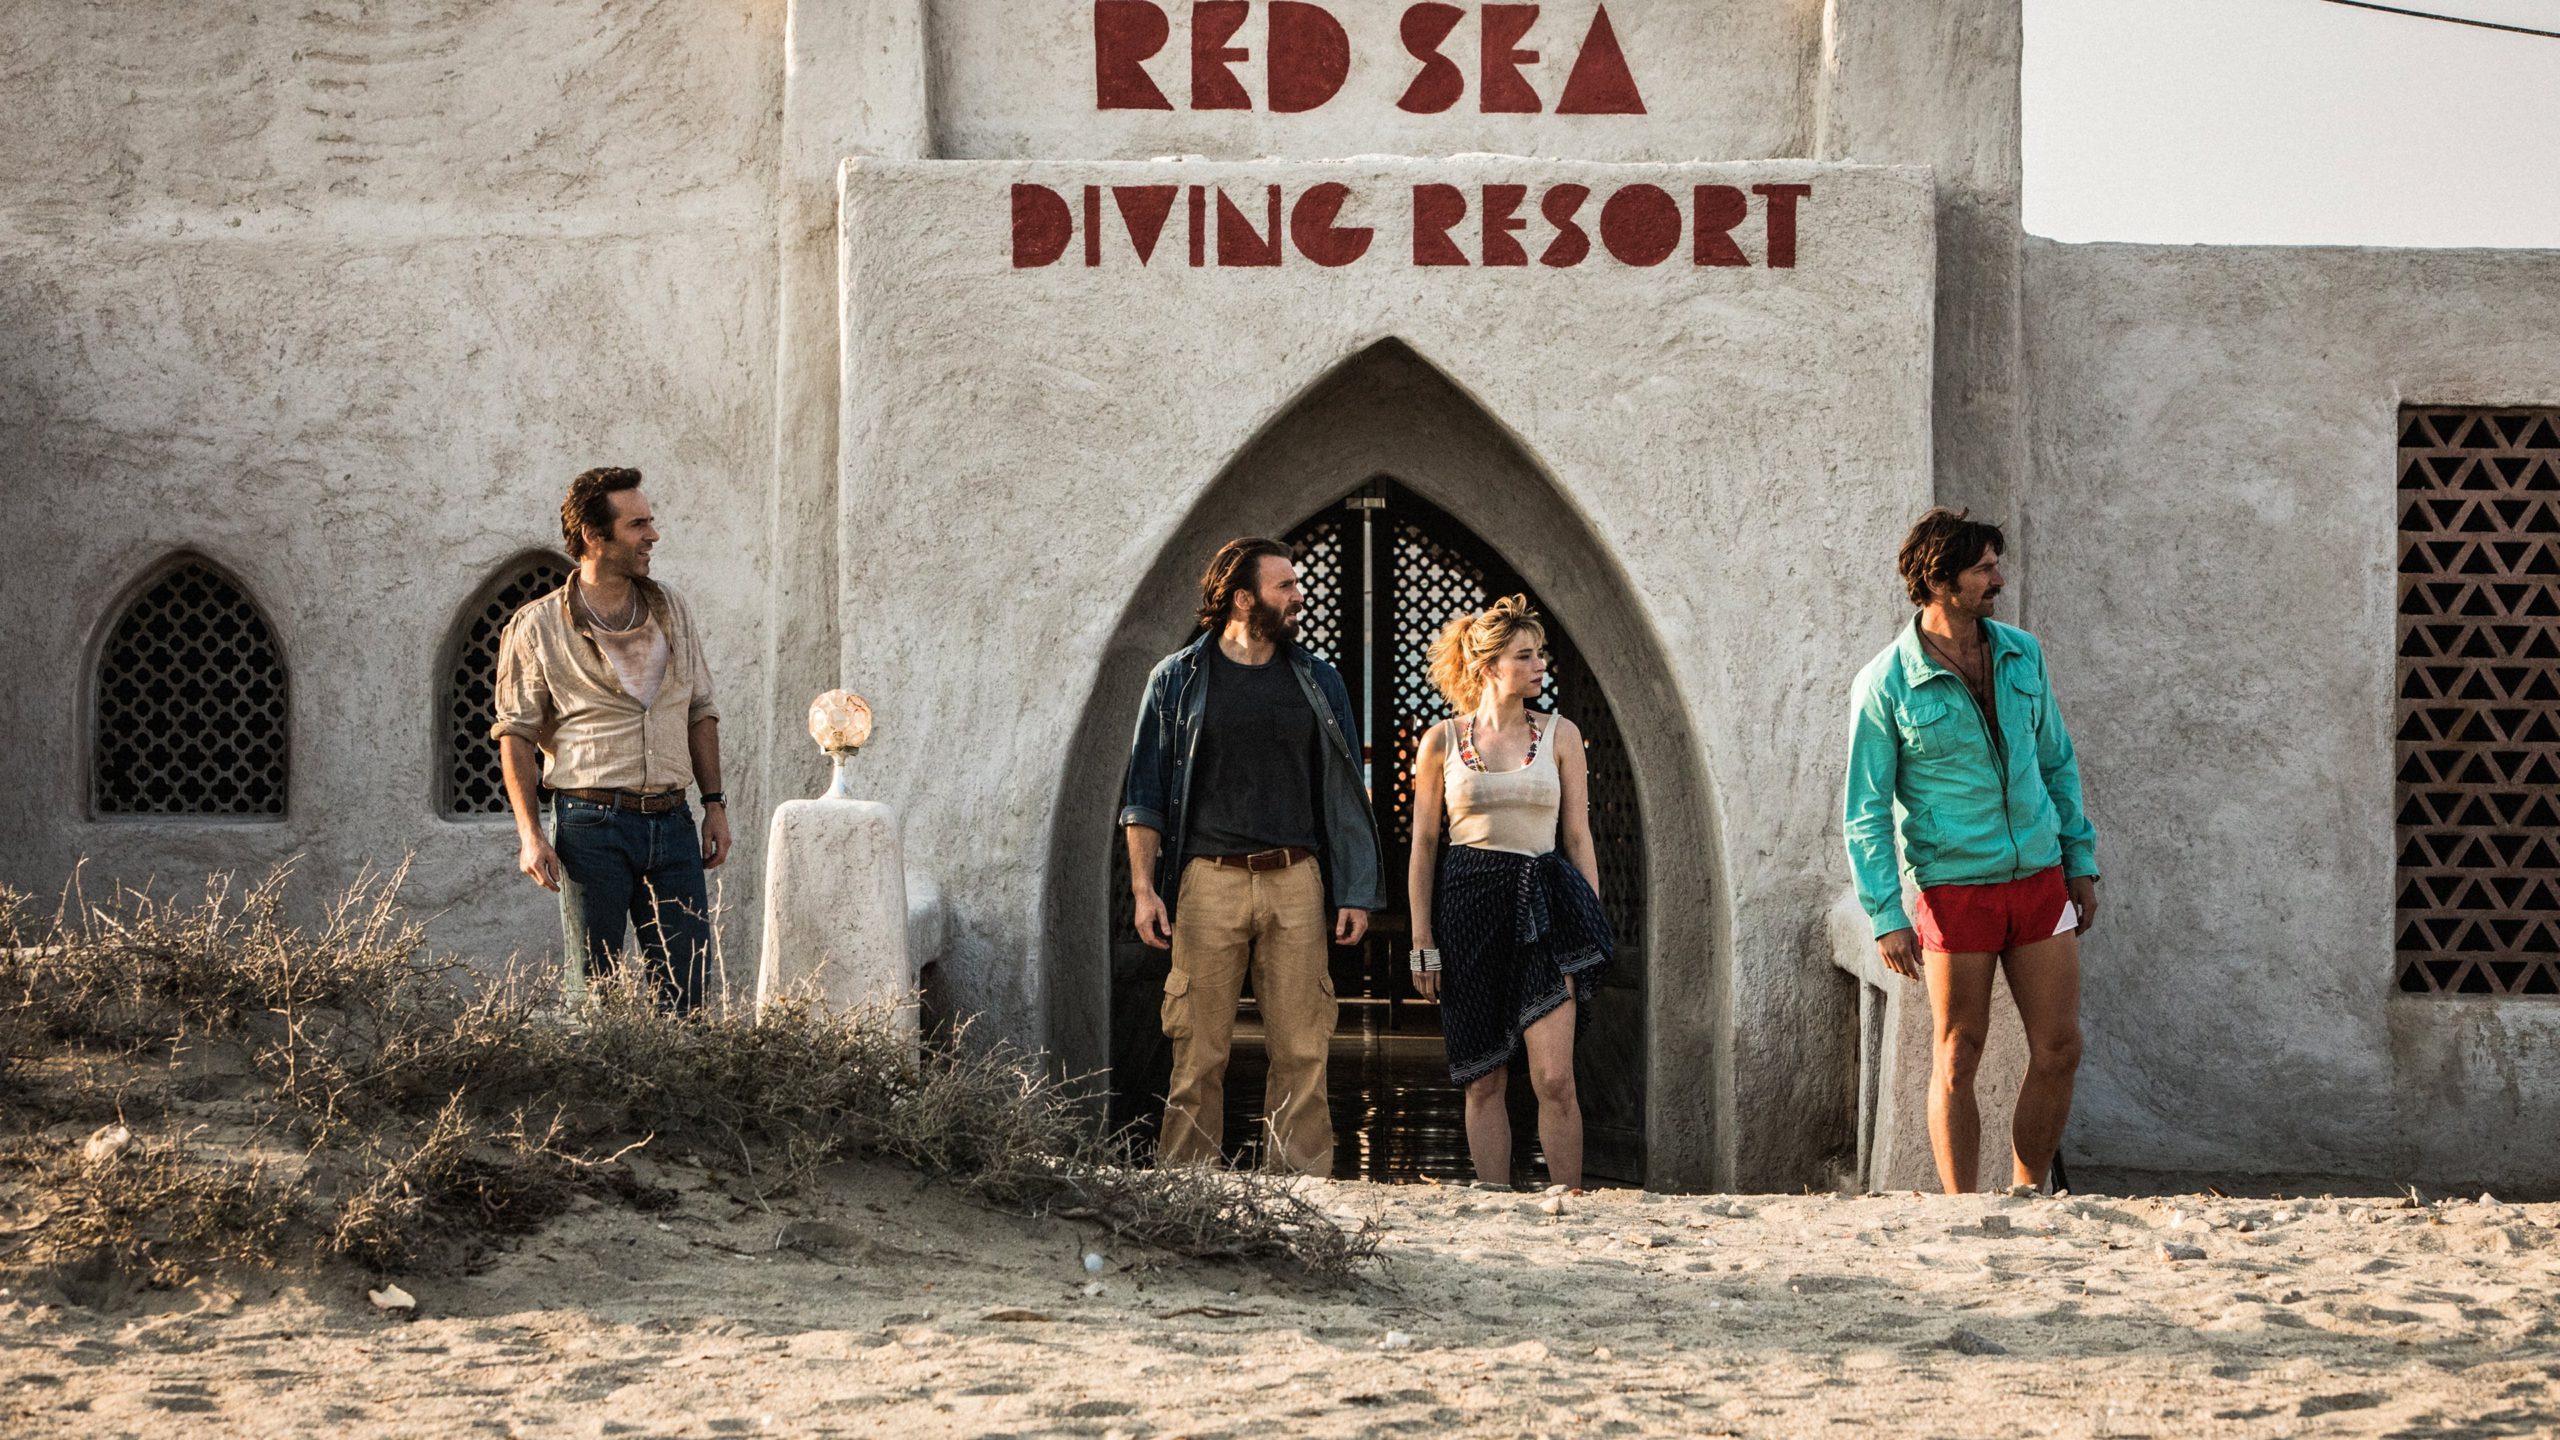 The Red Sea Diving Resort ปฏิบัติการแหวกทะเลแดง